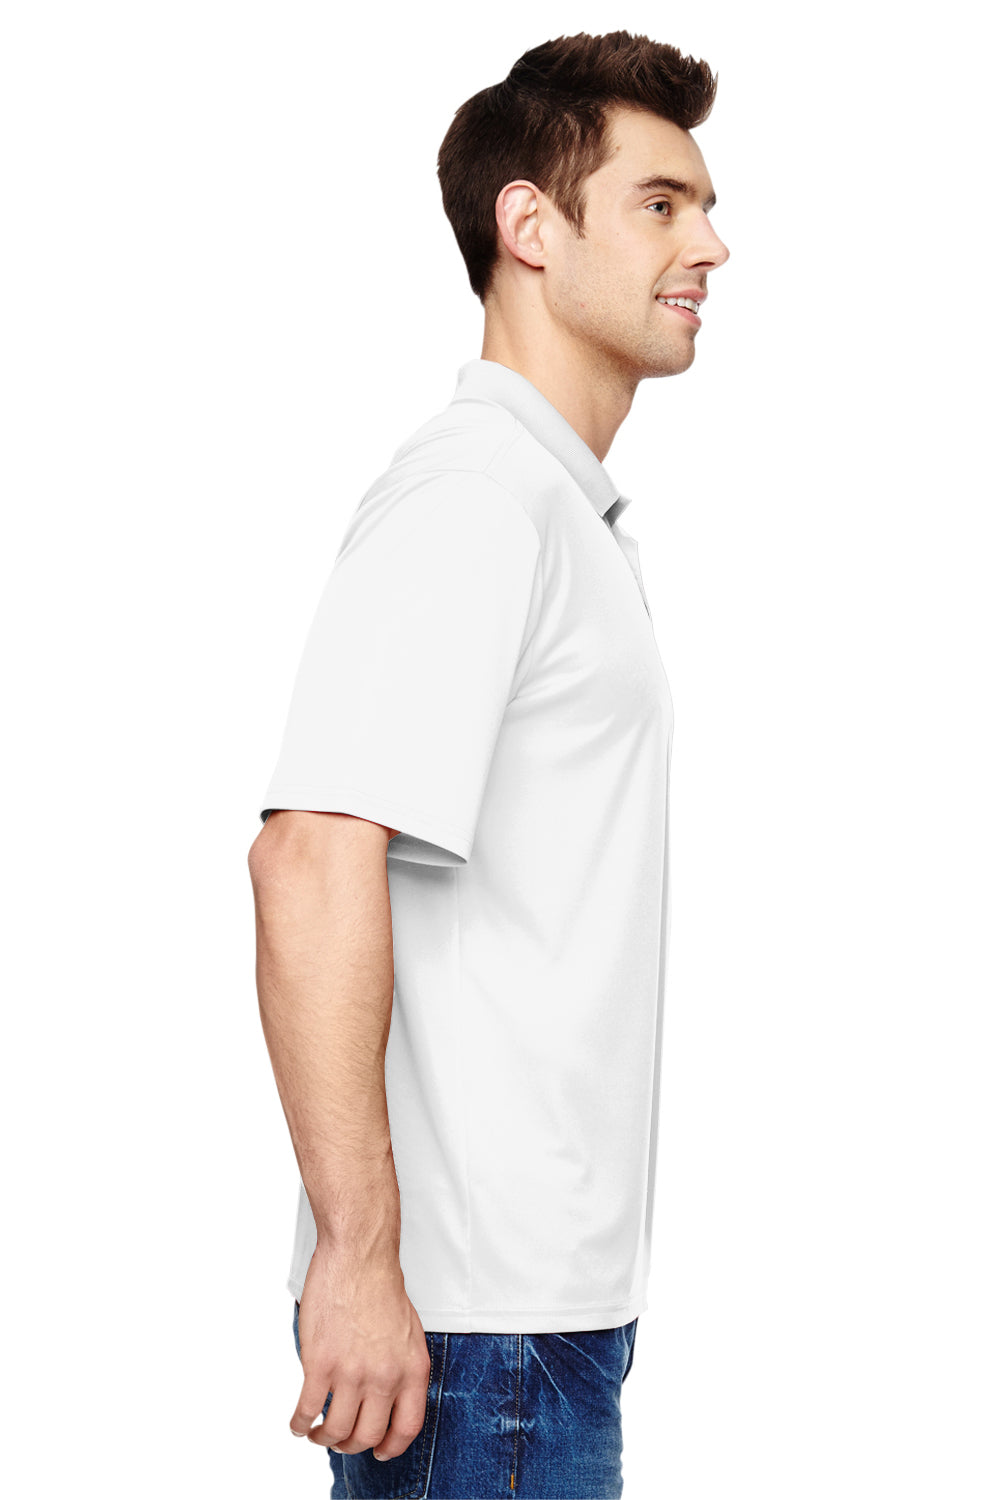 Hanes 4800 Mens Cool Dri Fresh IQ Moisture Wicking Short Sleeve Polo Shirt White Side